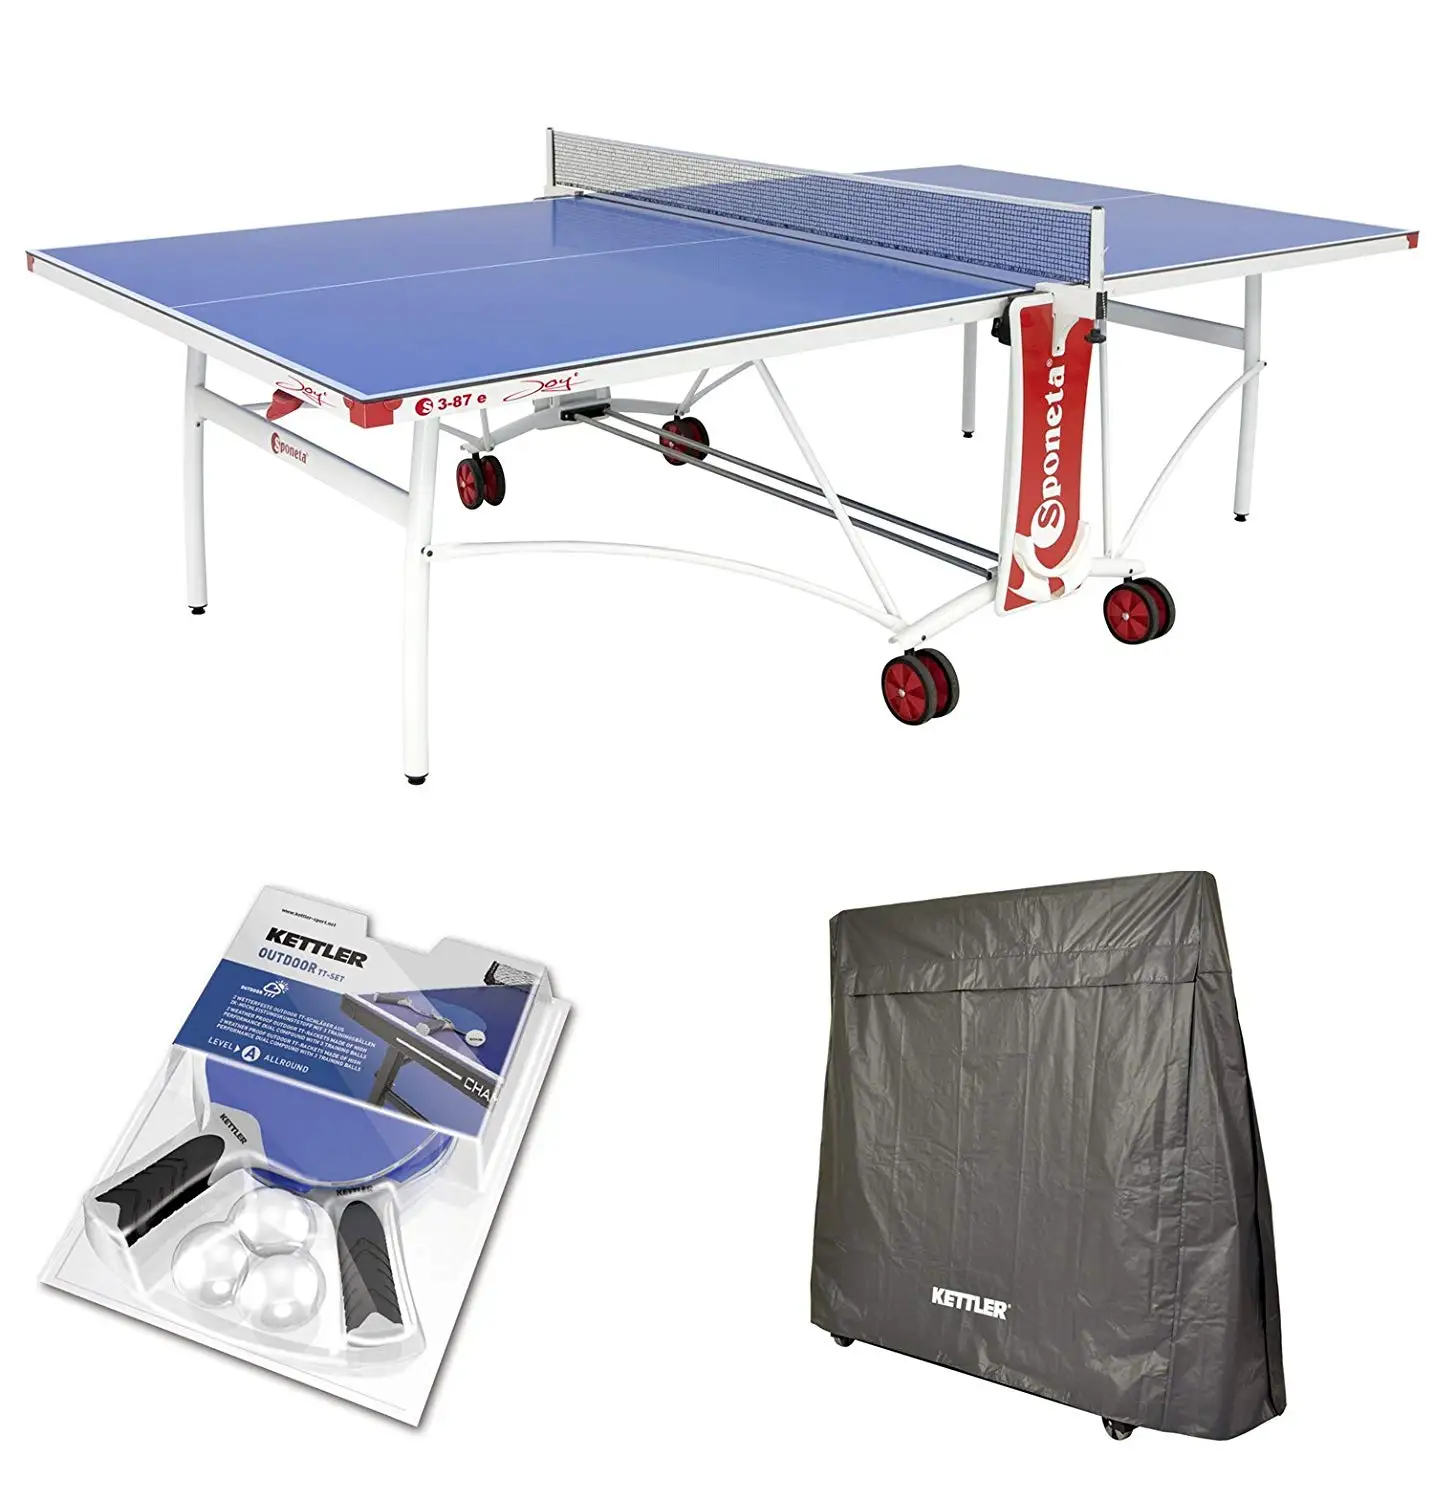 8-37 W Premium Indoor Table Tennis Table ITTF Tournament Approved Sponeta Super Compact